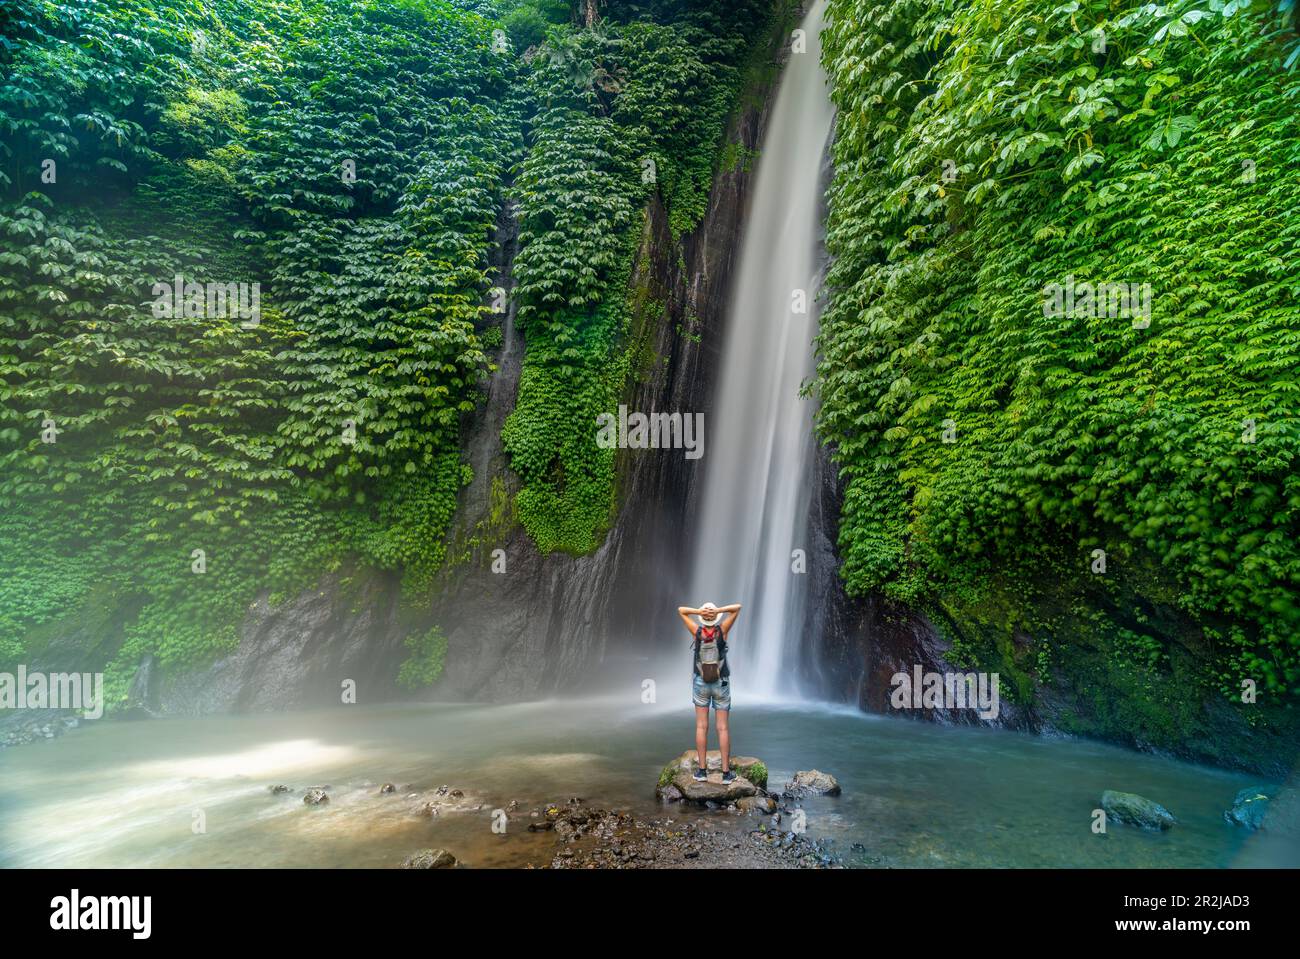 View of woman taking picture at Melanting waterfall, Kabupaten Buleleng, Gobleg, Bali, Indonesia, South East Asia, Asia Stock Photo